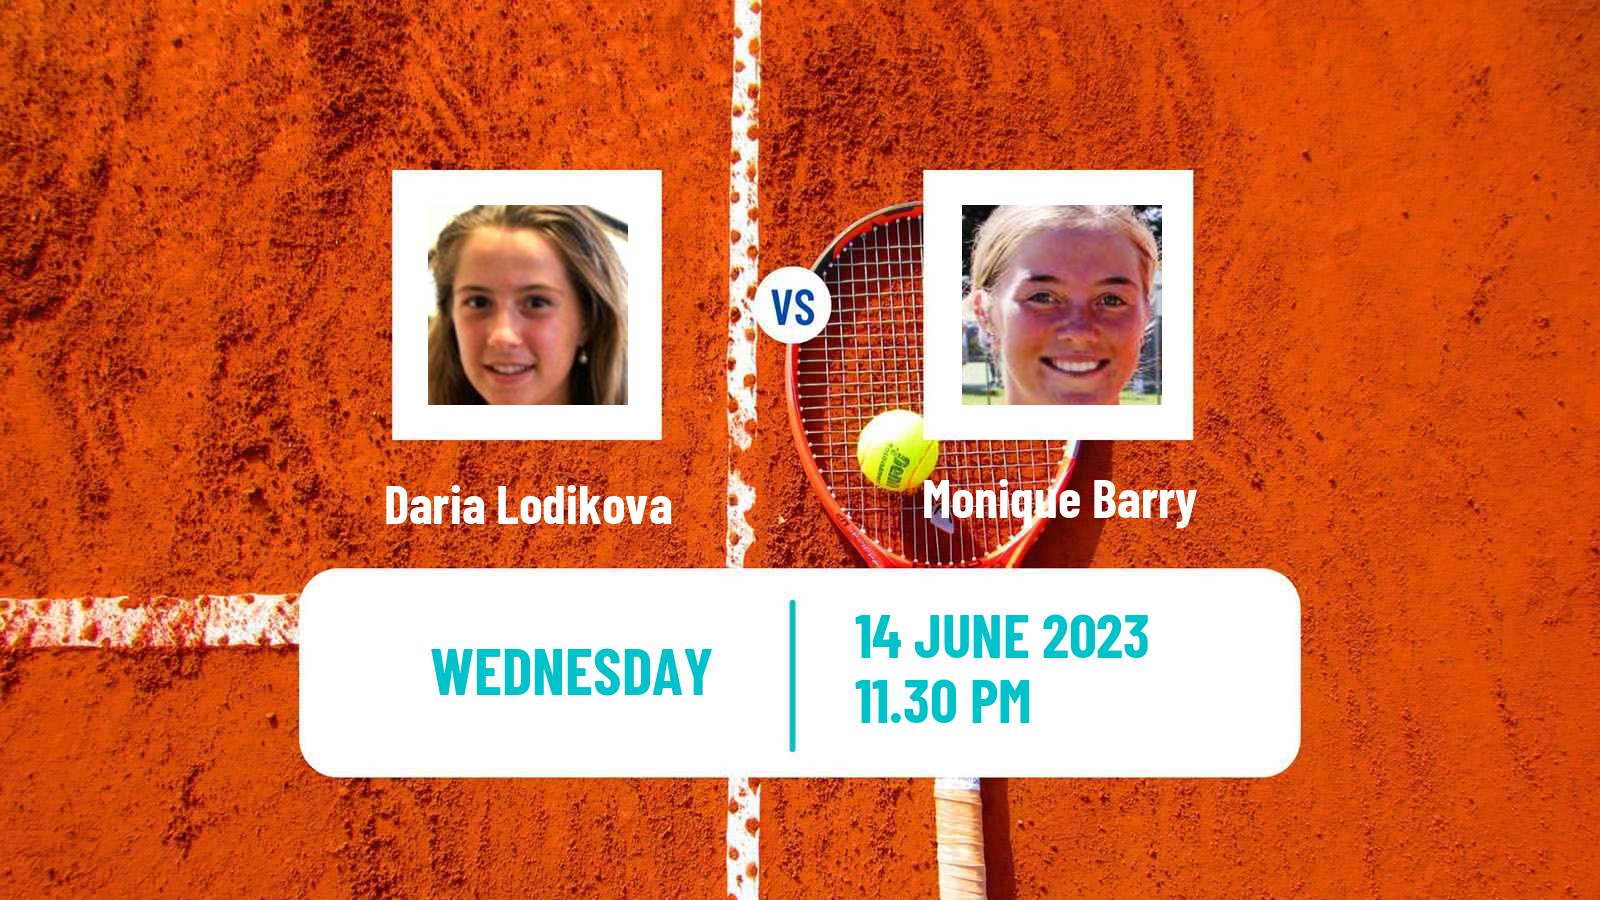 Tennis ITF W25 Tainan Women Daria Lodikova - Monique Barry